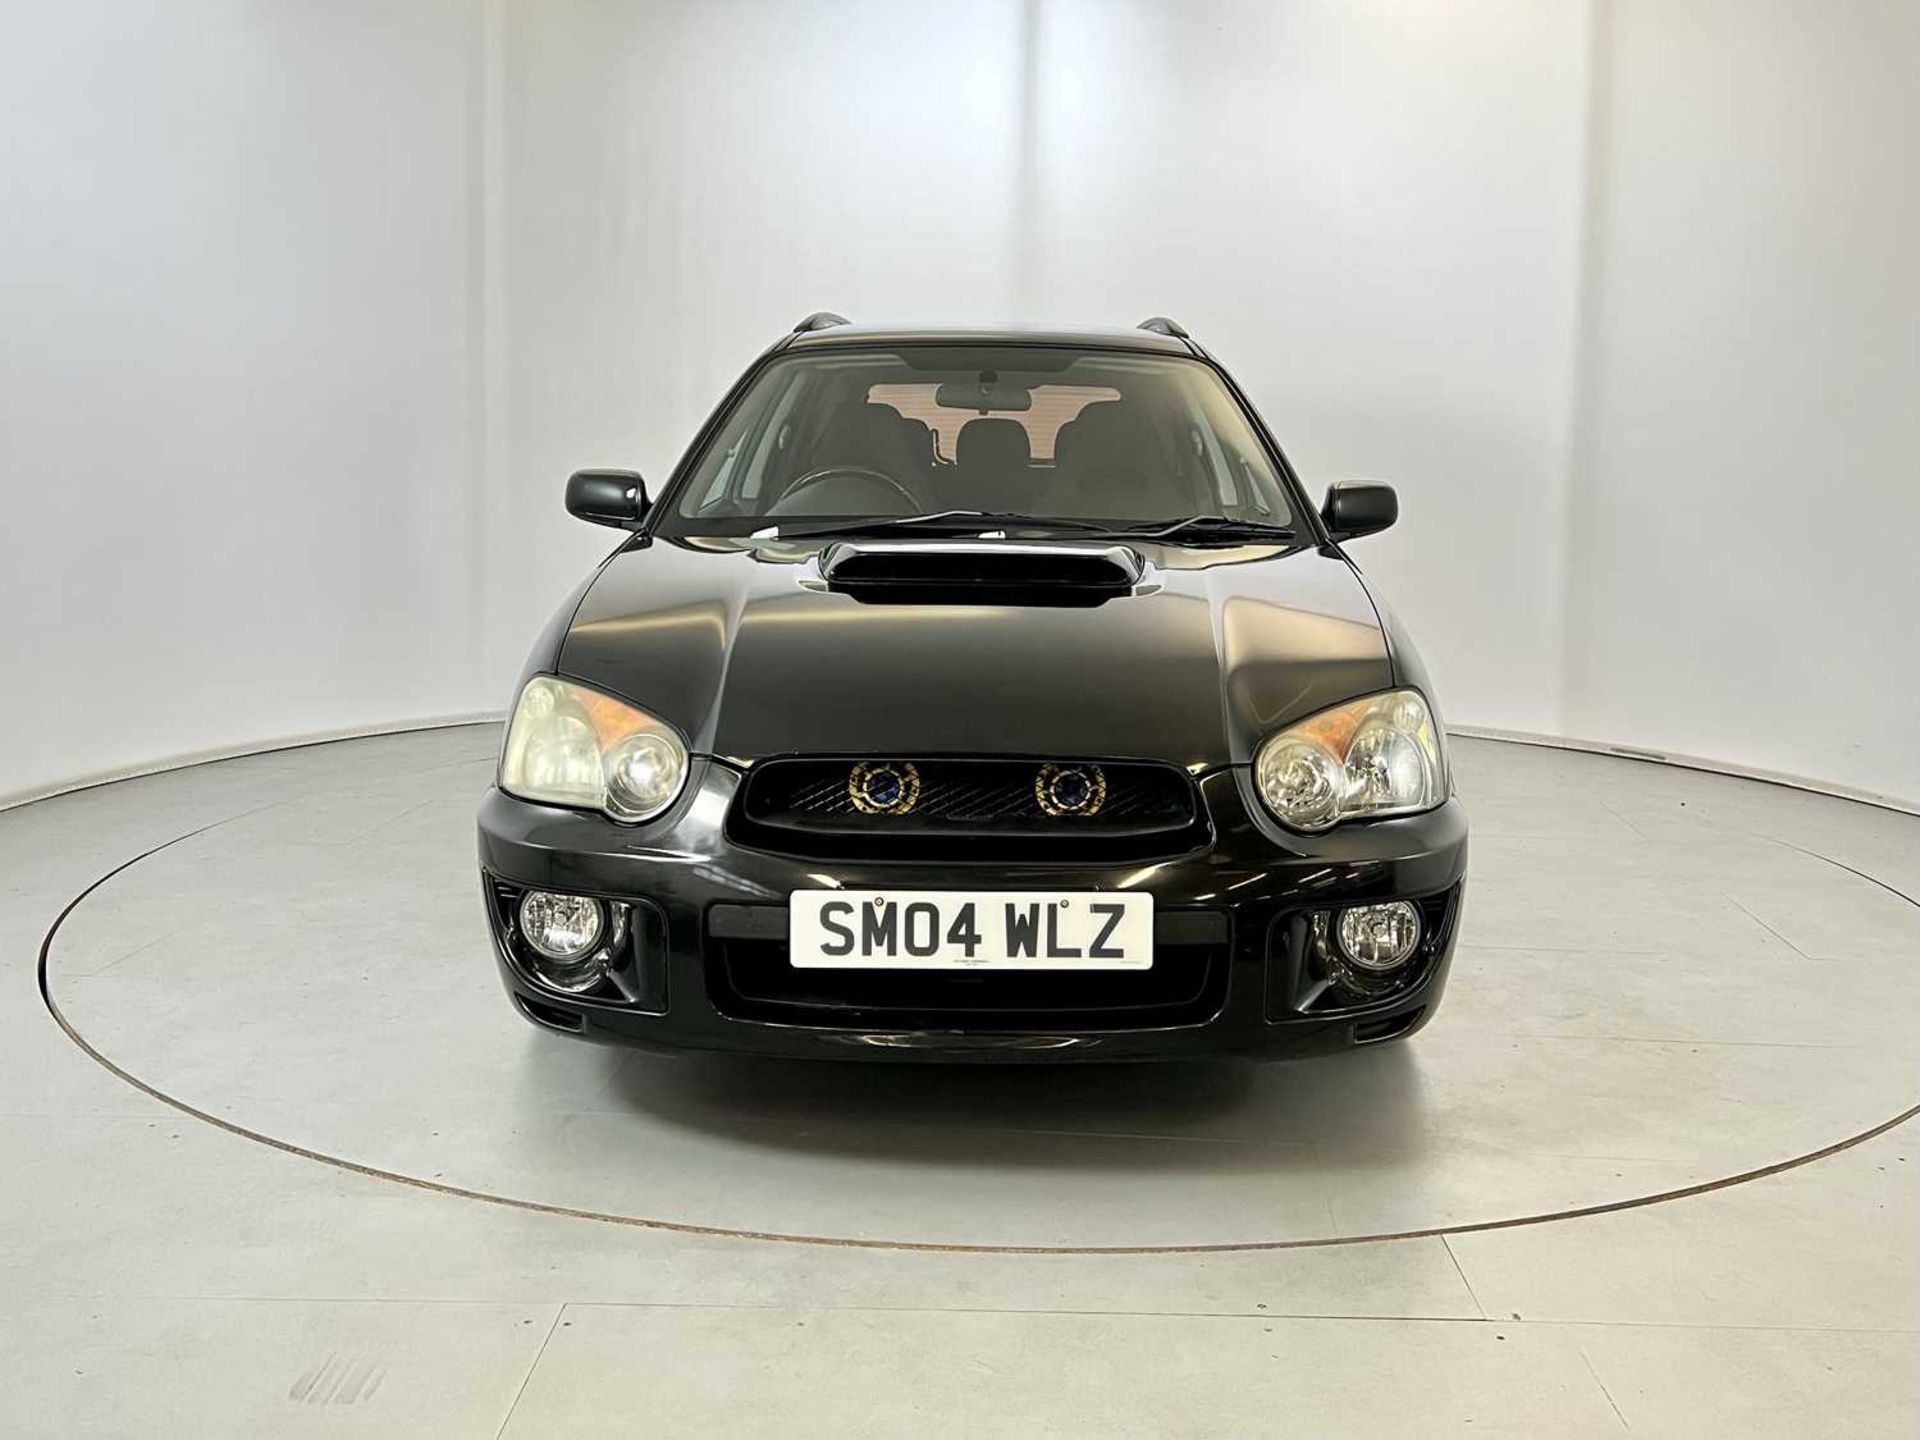 2004 Subaru Impreza WRX - Image 2 of 34